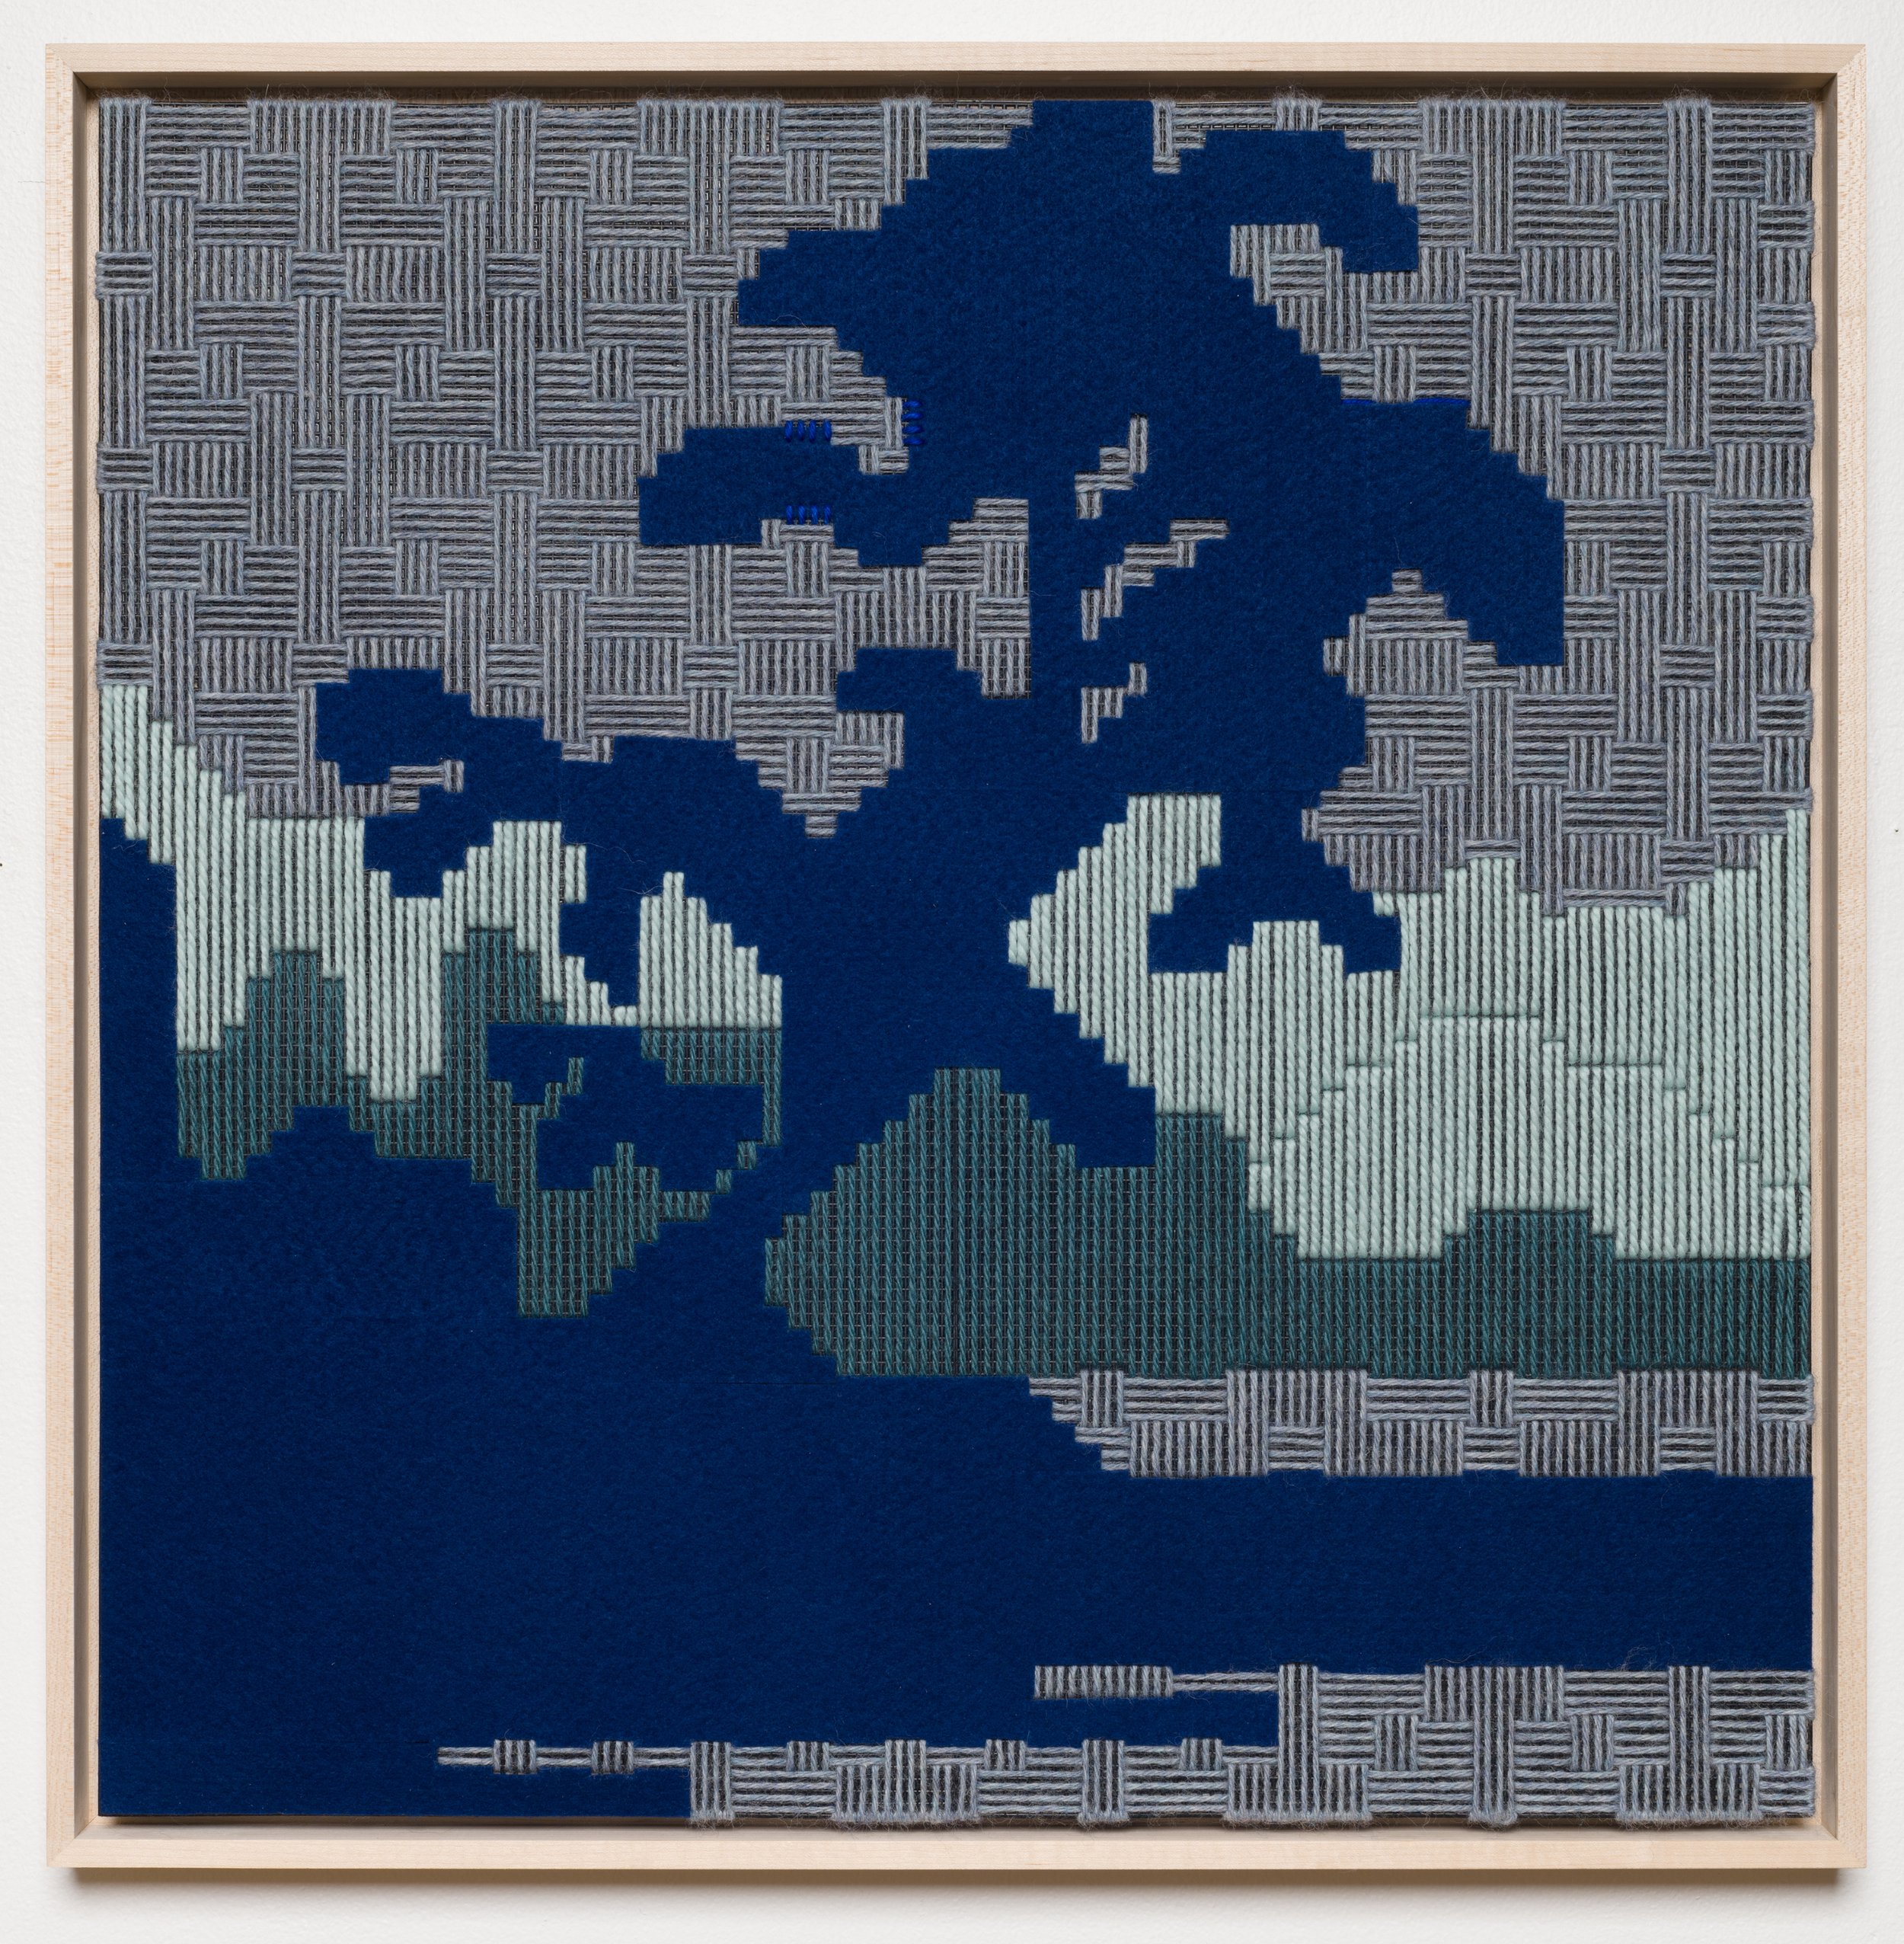  BLUE | 22.5 x 22.5 inches / 57.1 x 57.1 cm, Needlepoint merino wool, alpaca wool, felt on canvas mesh, 2021 